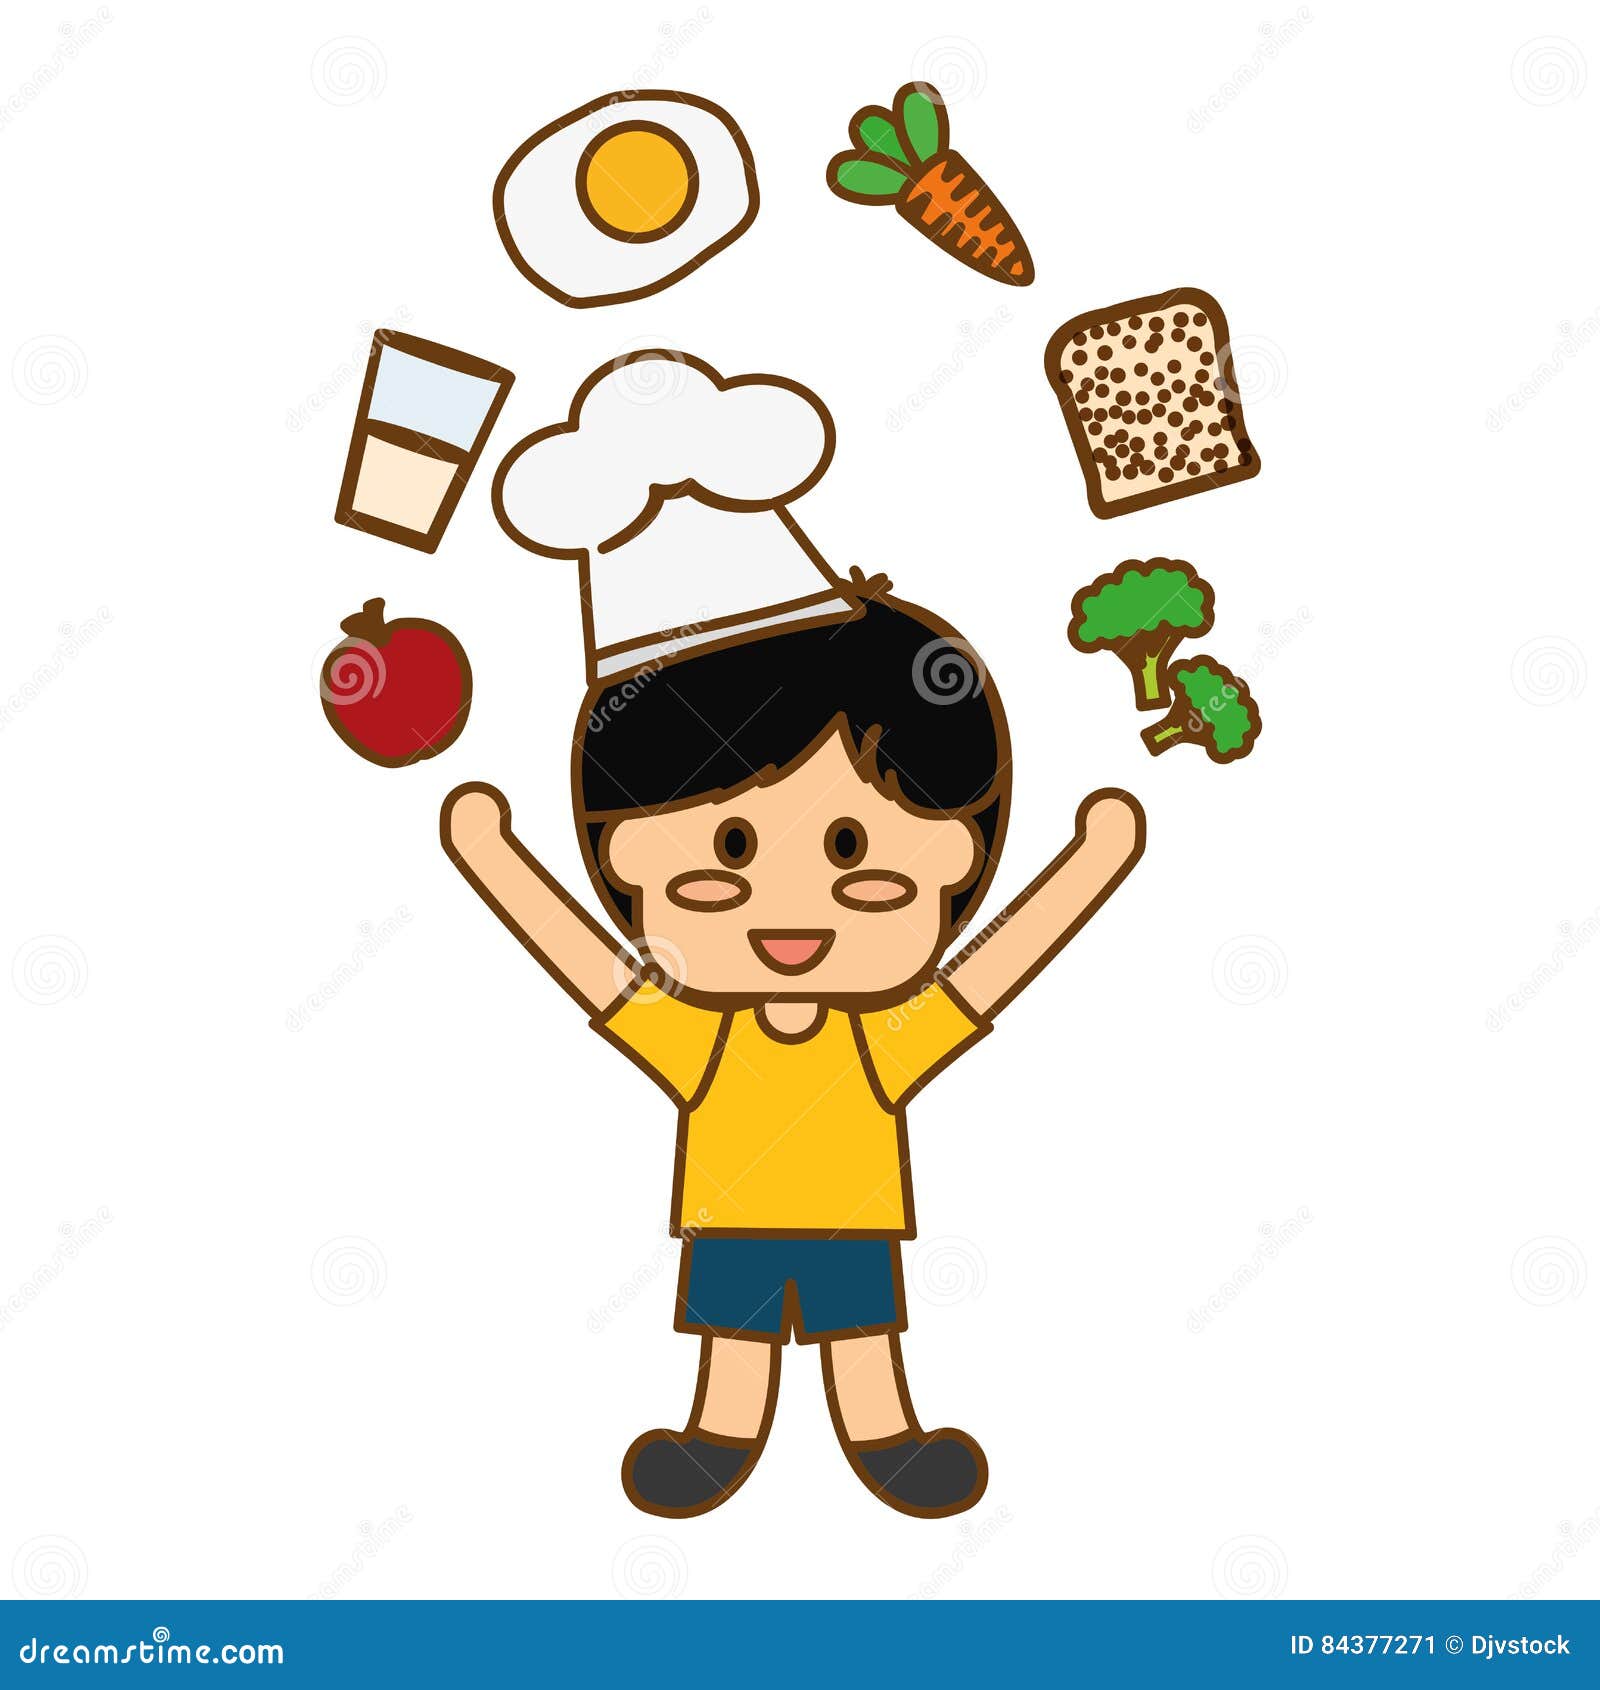 Kids food nutrition stock illustration. Illustration of cartoon - 84377271